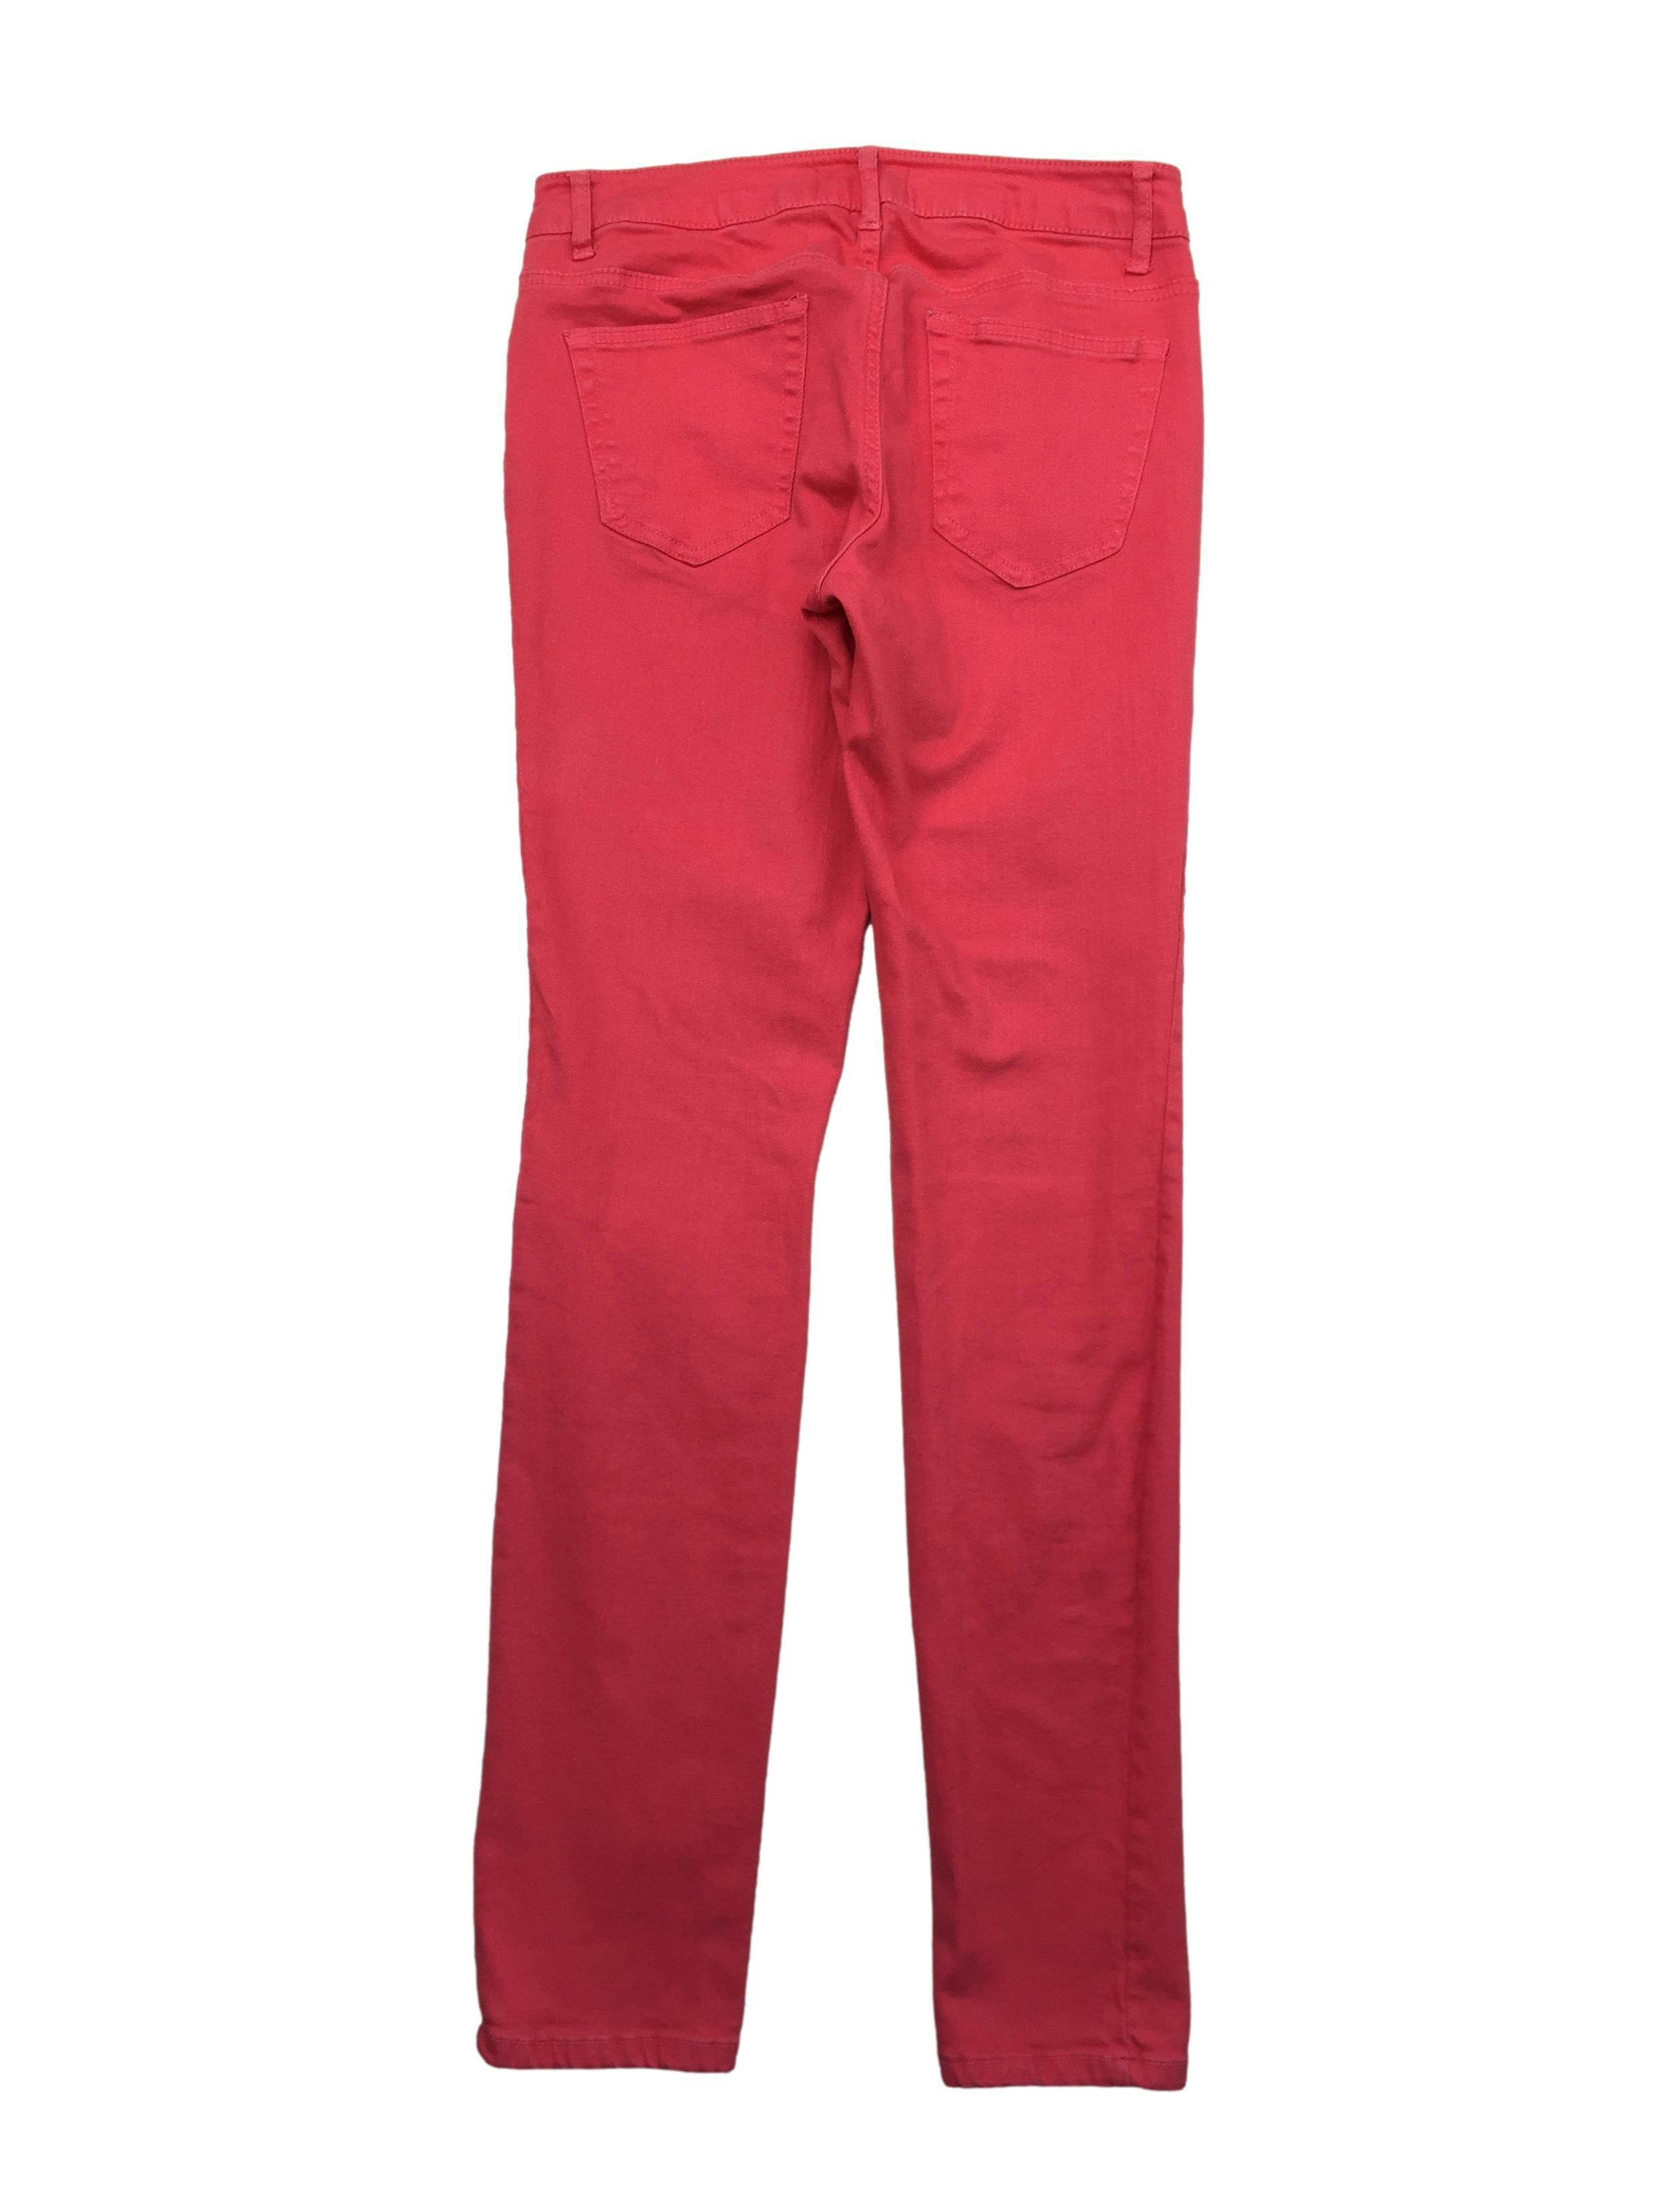 Skinny jean rojo 98% algodón, five-pockets. Cintura 74cm, Tiro 21cm, Largo 98cm.